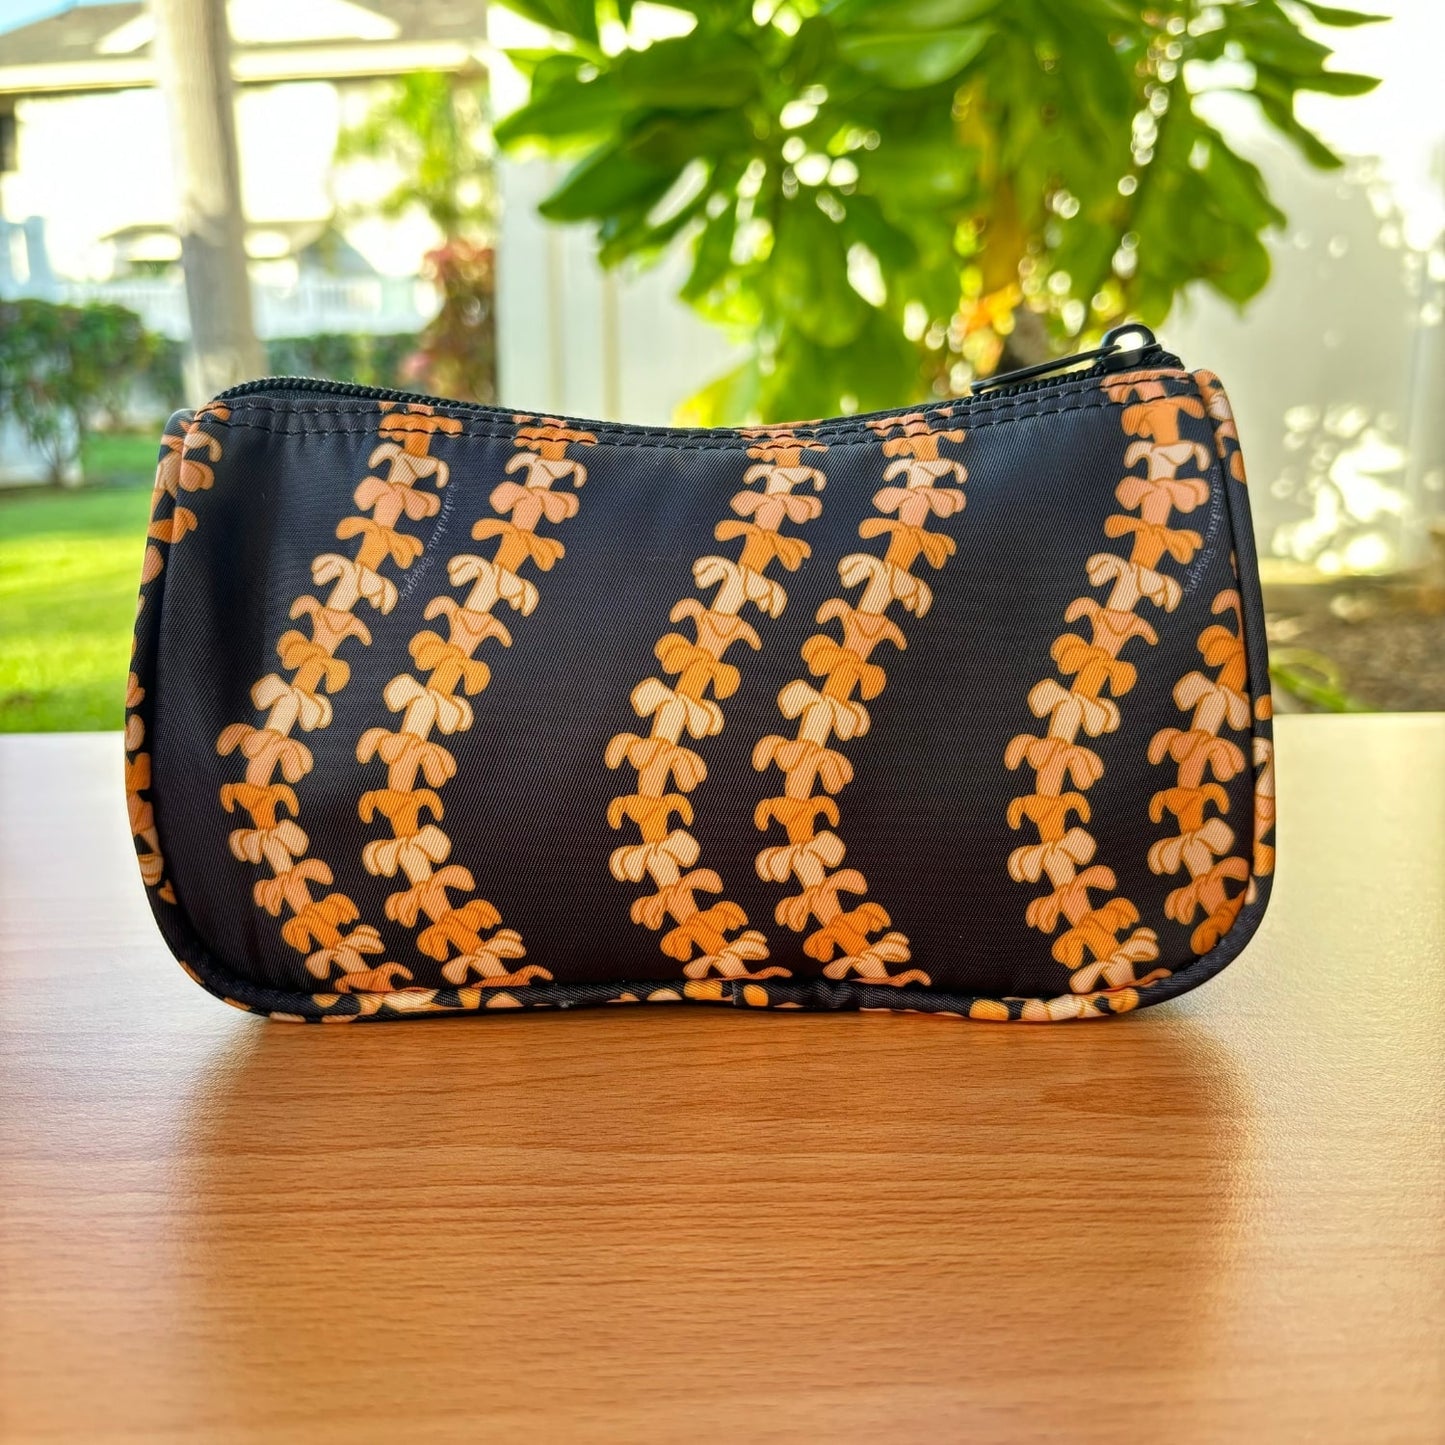 grab and go set includes mini zipper pouch and wristlet key fob in kaulua black orange lei - from Puakenikeni Designs - back view of mini zipper pouch